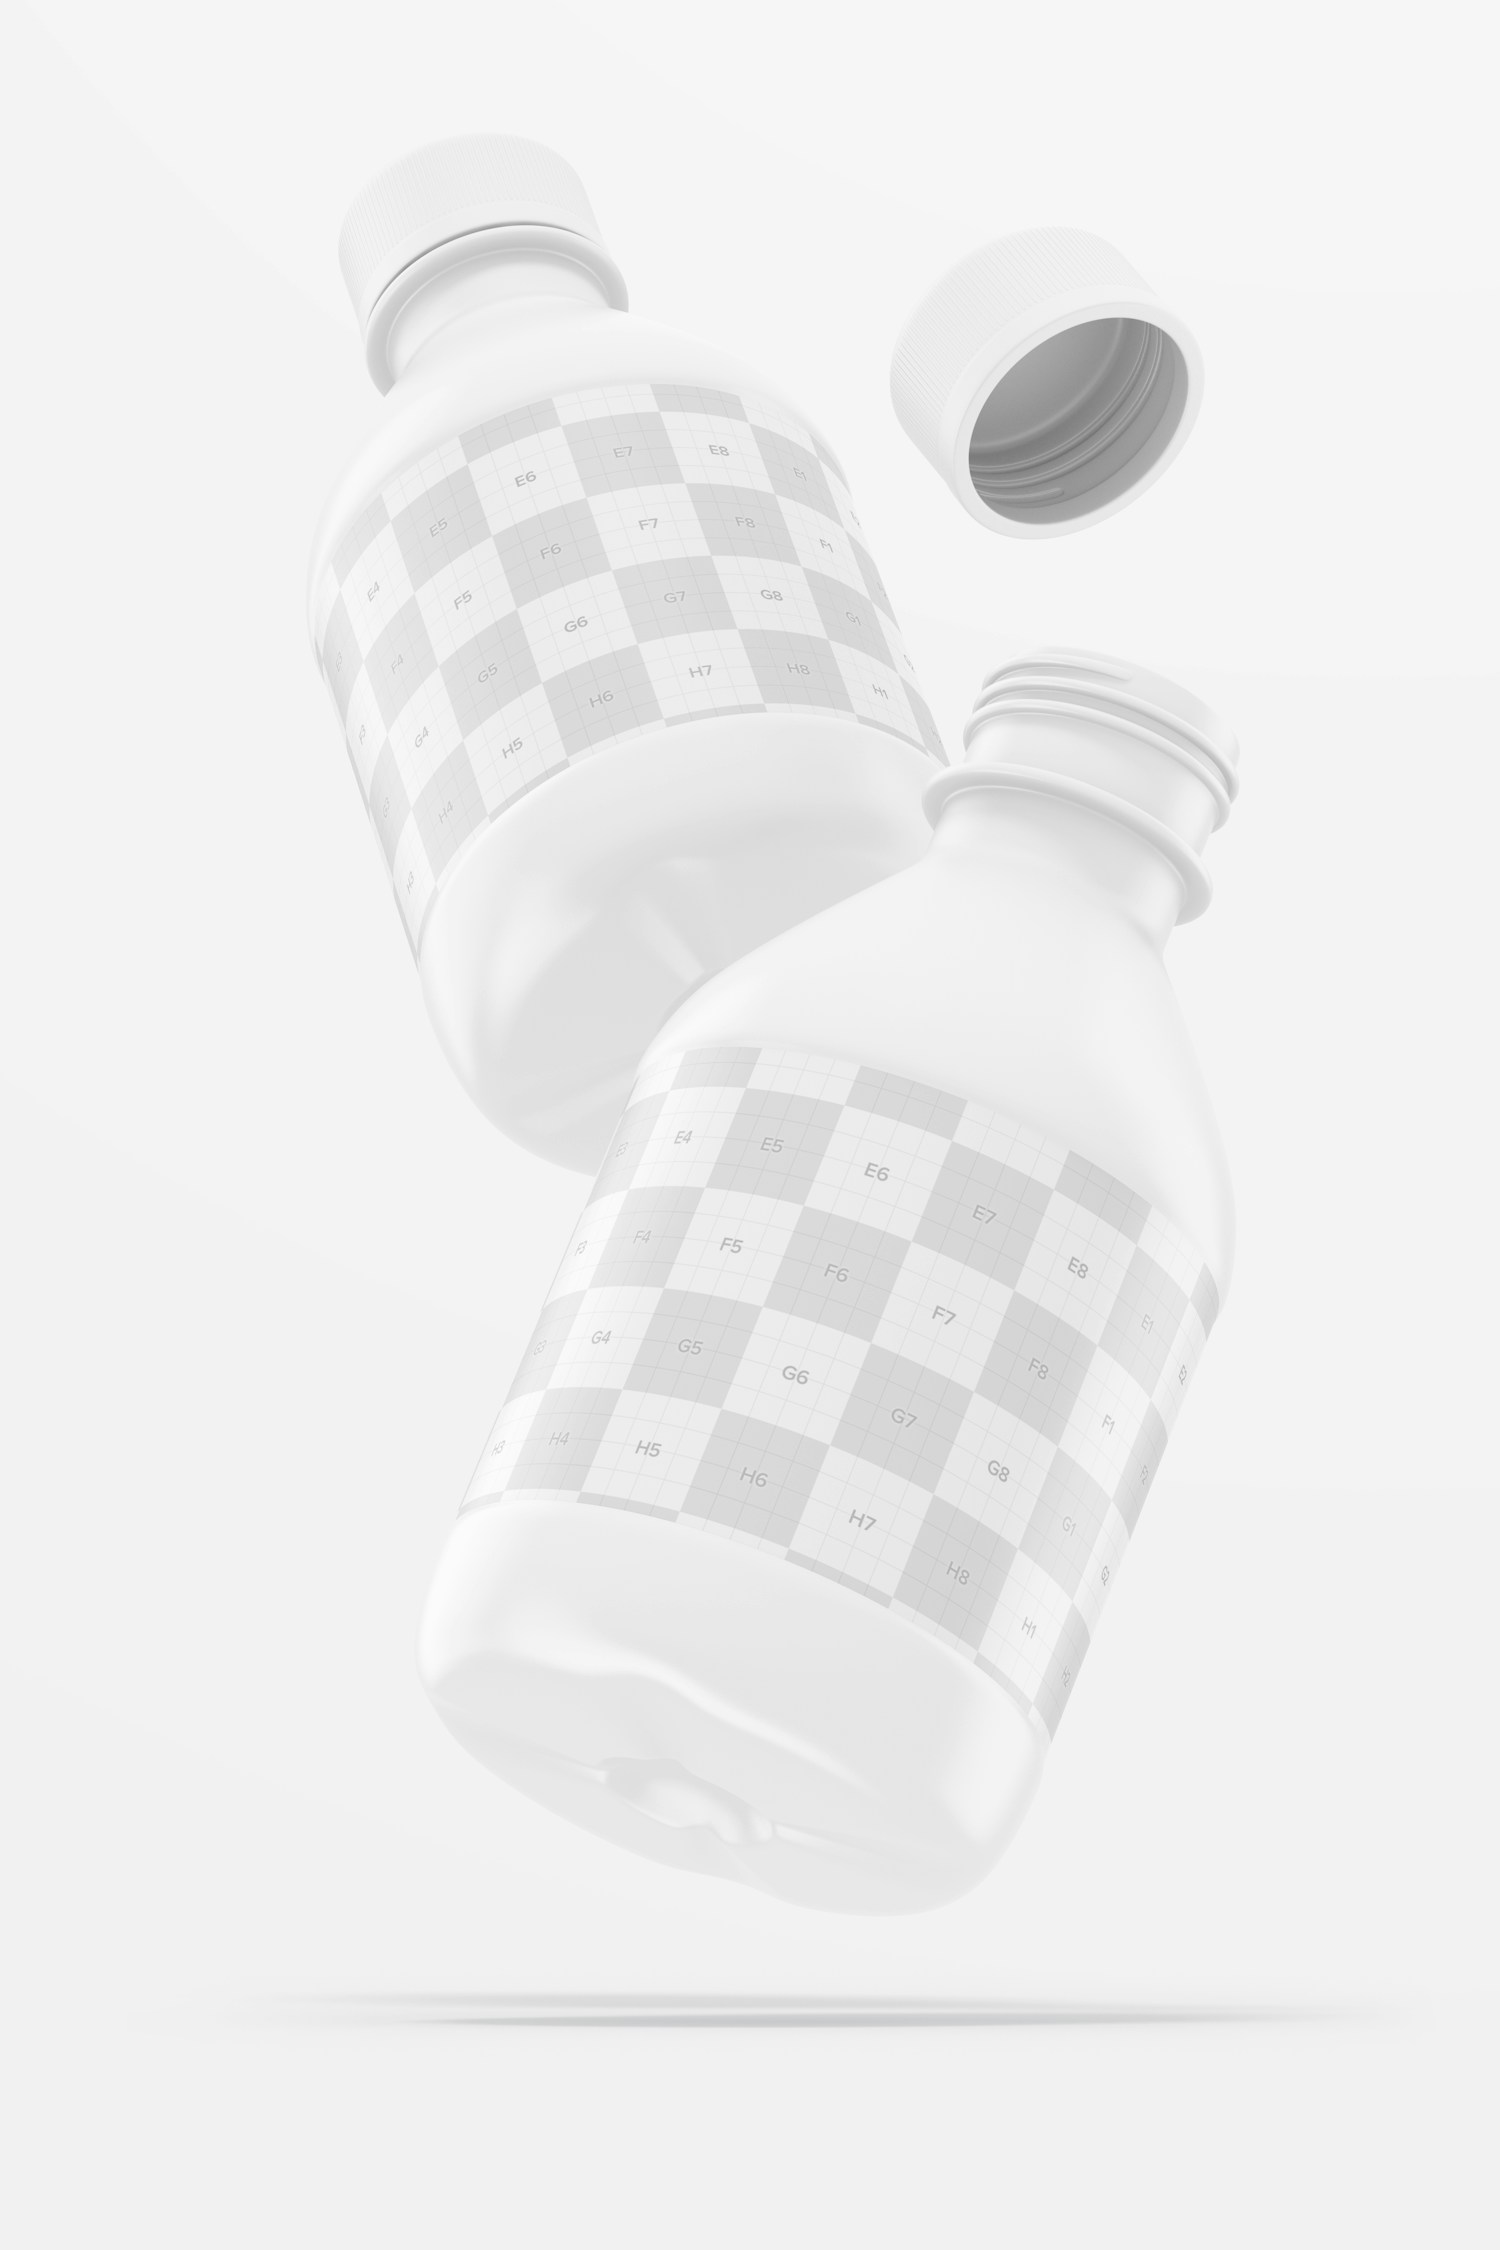 Mini Water Bottles Mockup, Floating